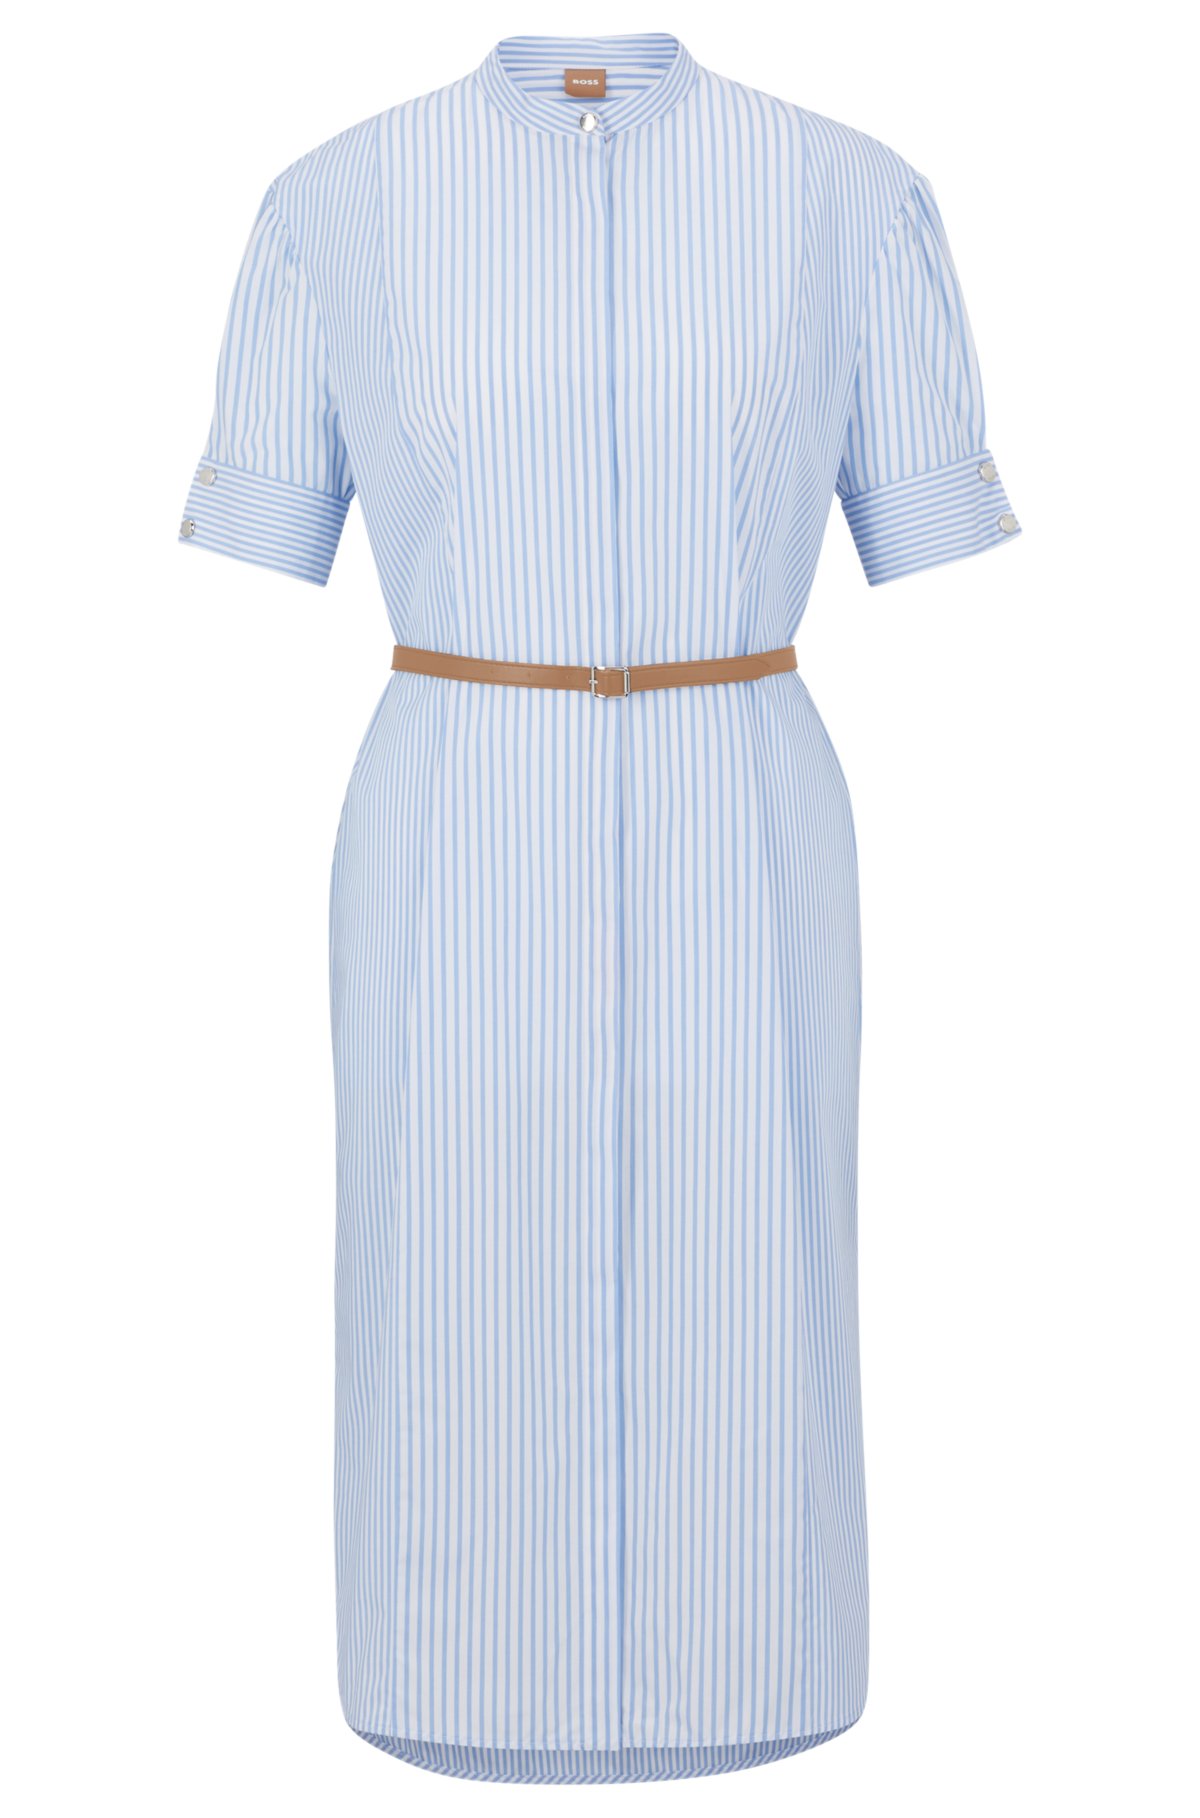 Cotton shirt dress with vertical stripes